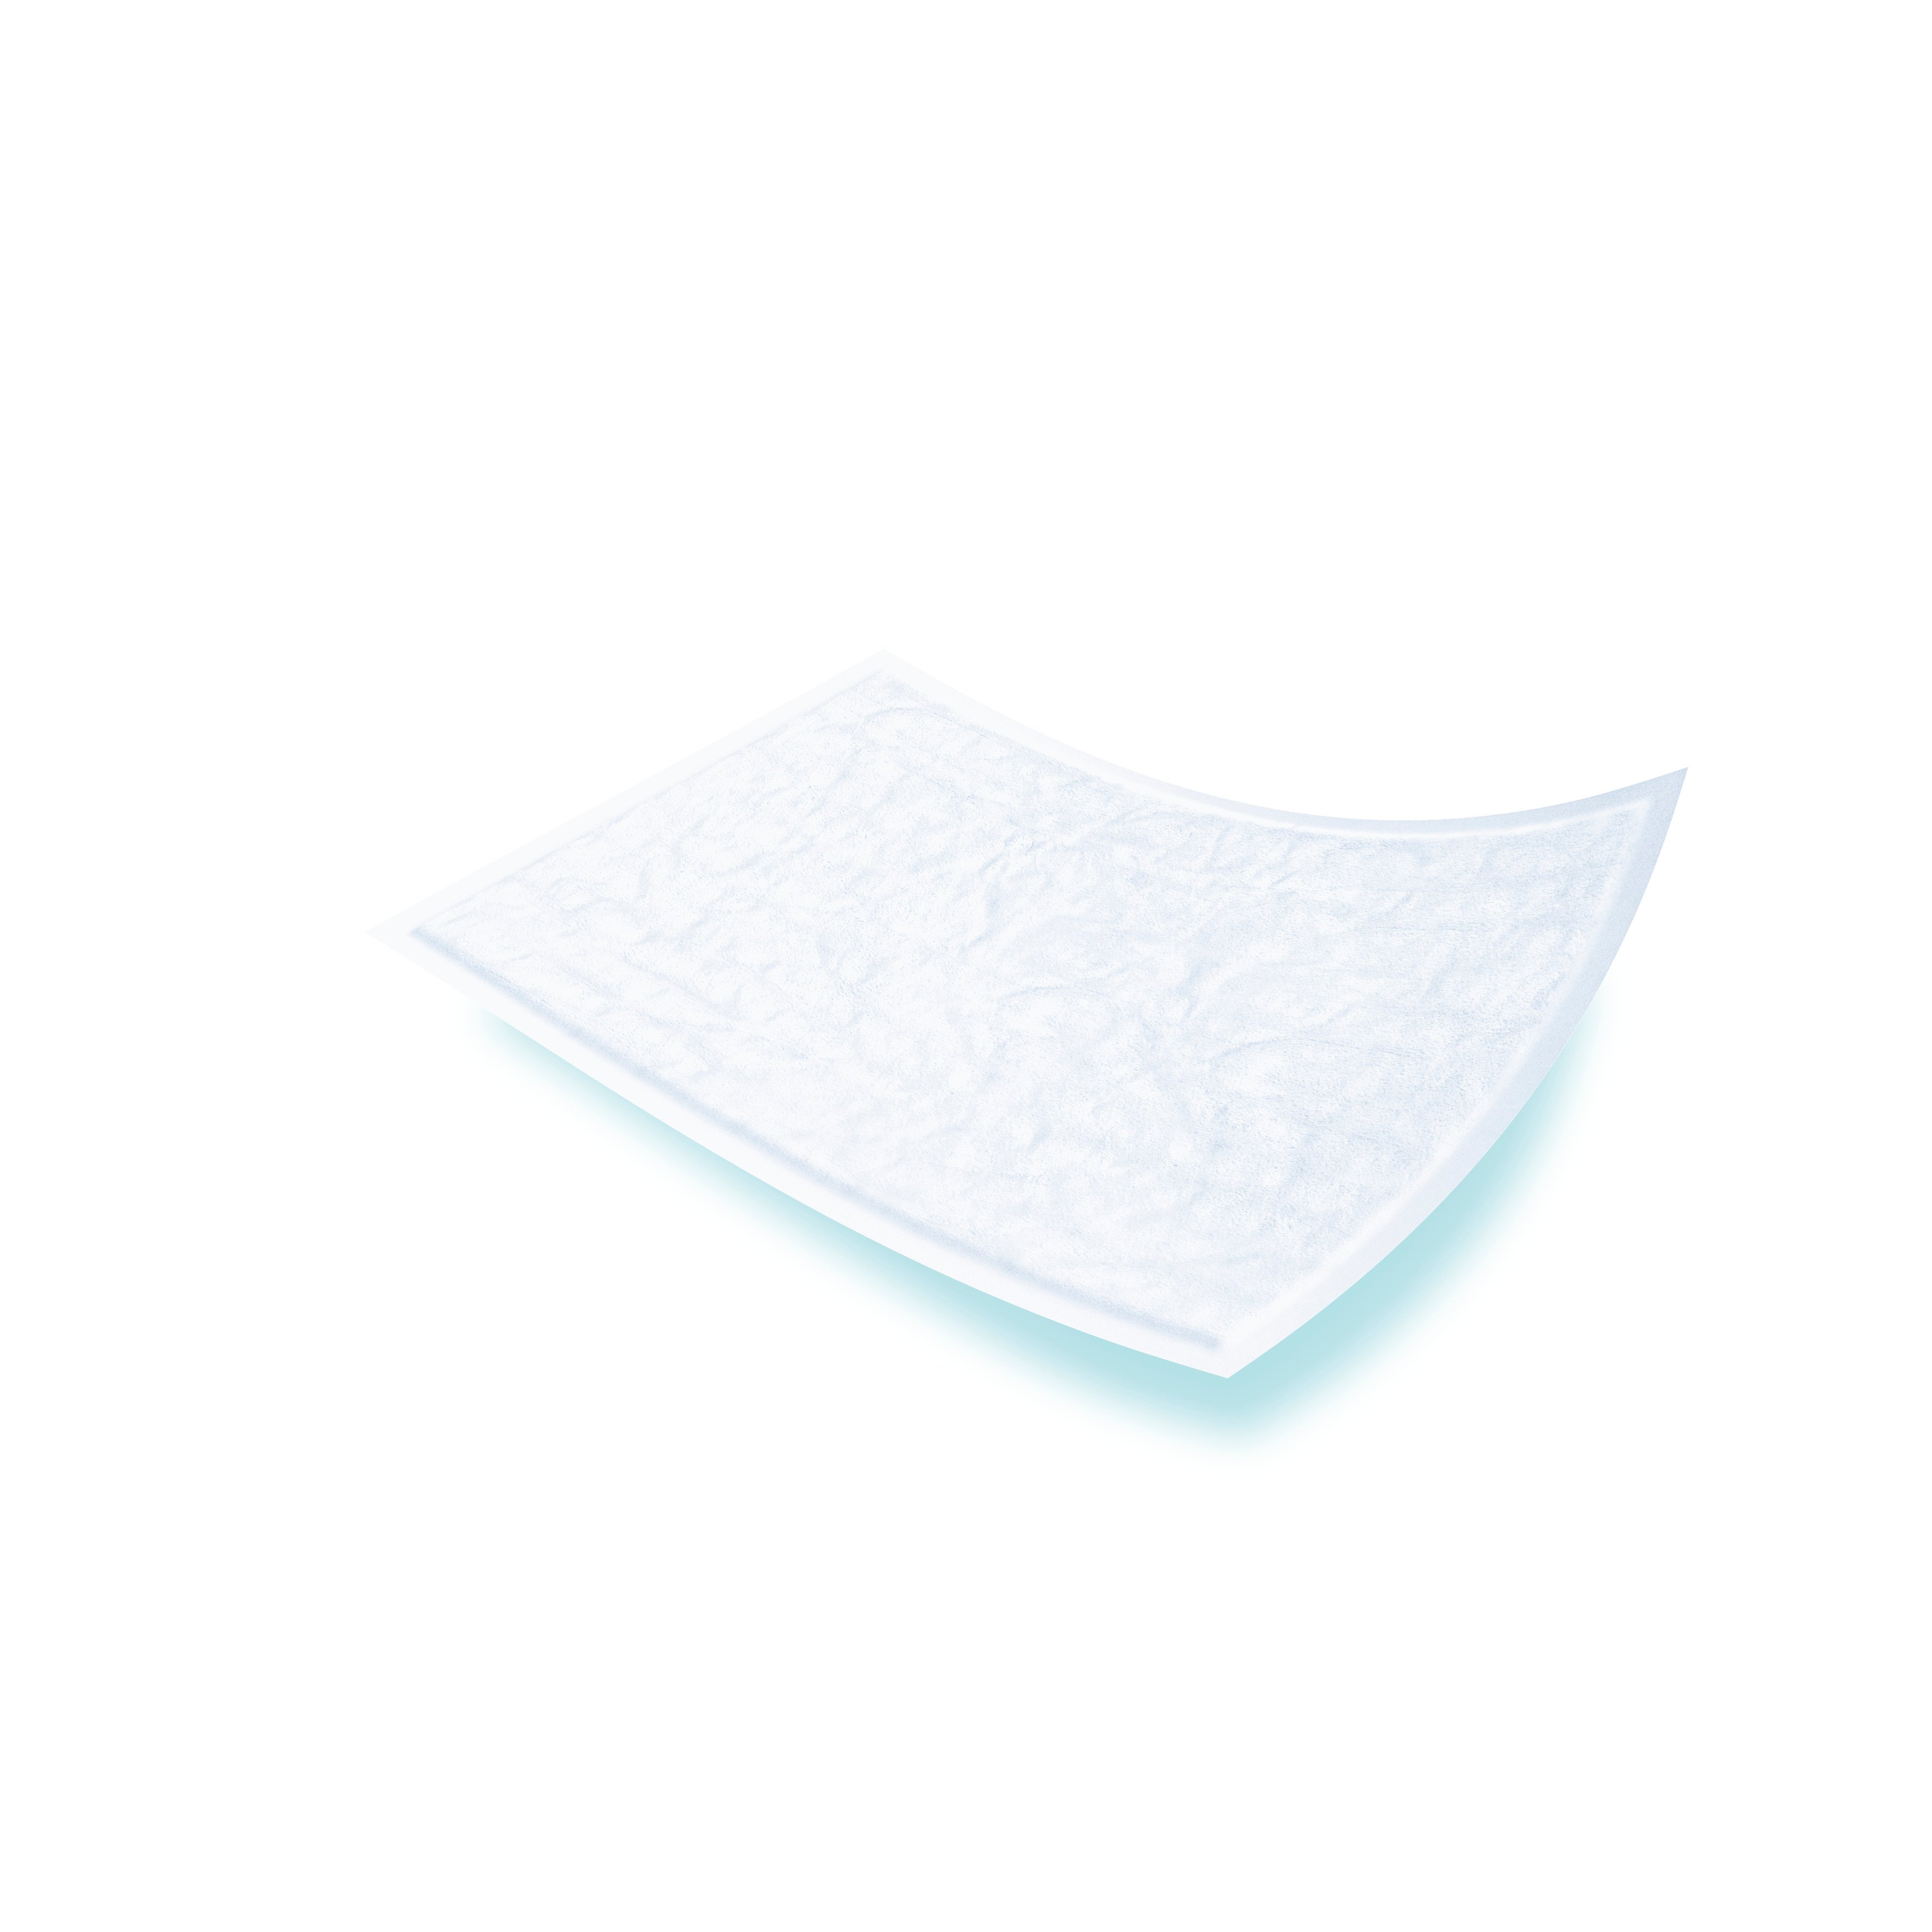 Одноразовые пеленки Tena Bed Normal, 60x60 см, 5 шт. - фото 3